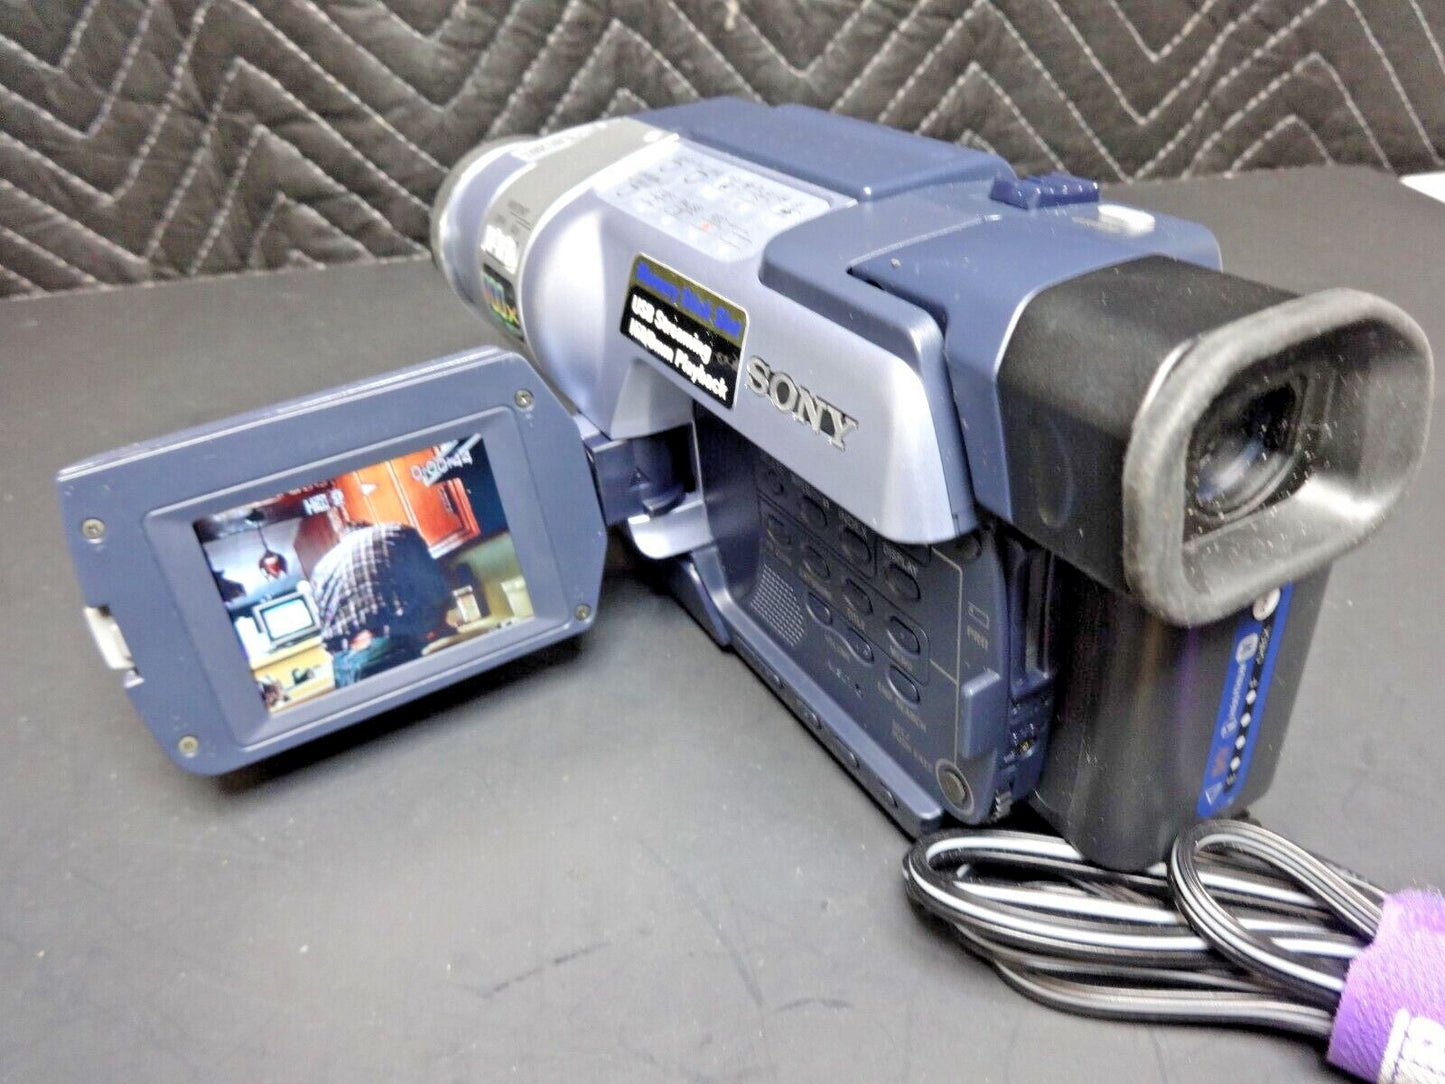 Sony Handycam DCR-TRV350 Digital 8 Camcorder w/ AV Cord & Power Clean & Working